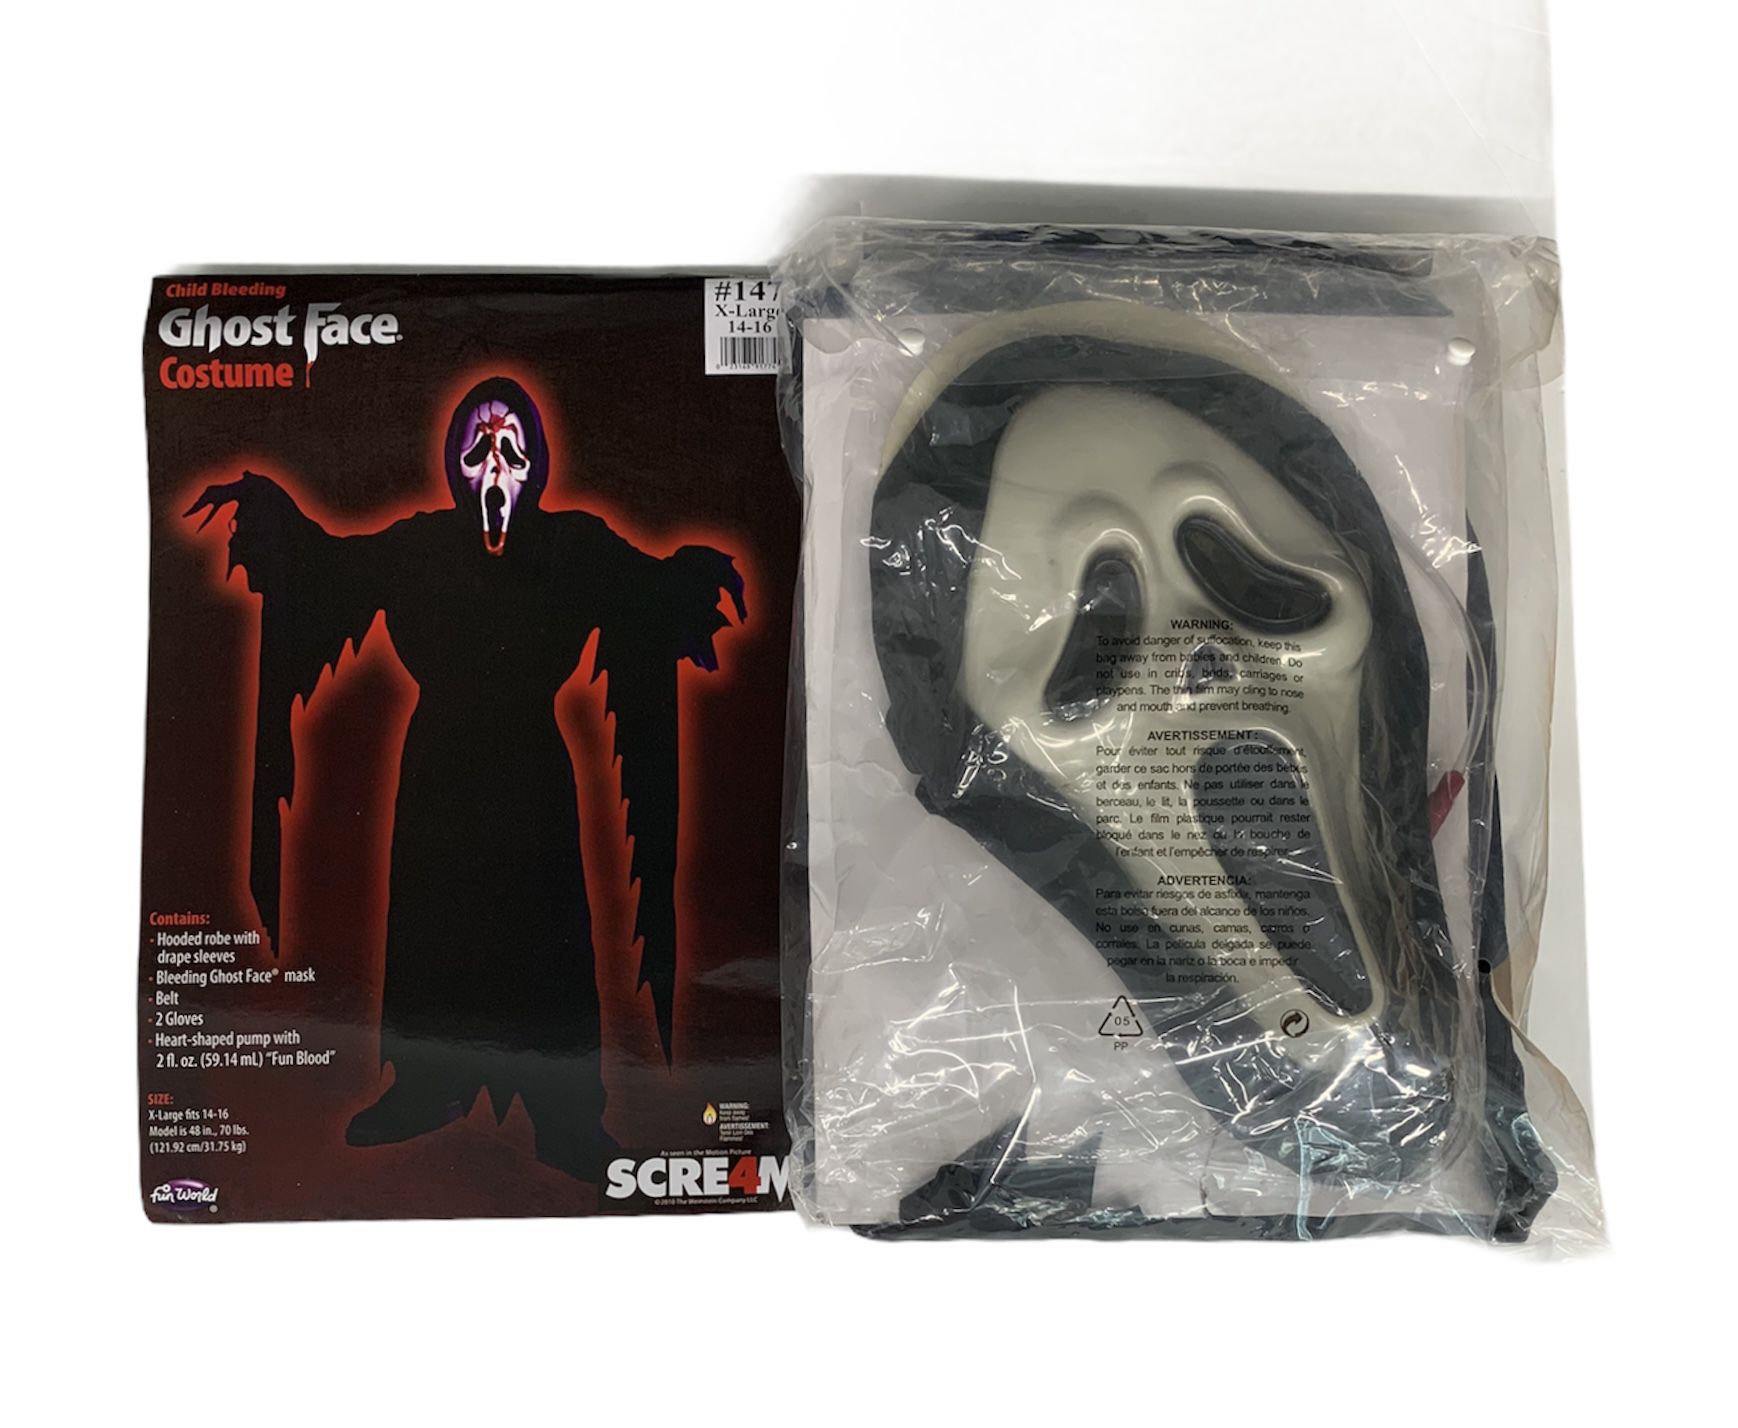 Scream SCRE4M Bleeding Ghost Face Costume  XL Size 14-16 Child